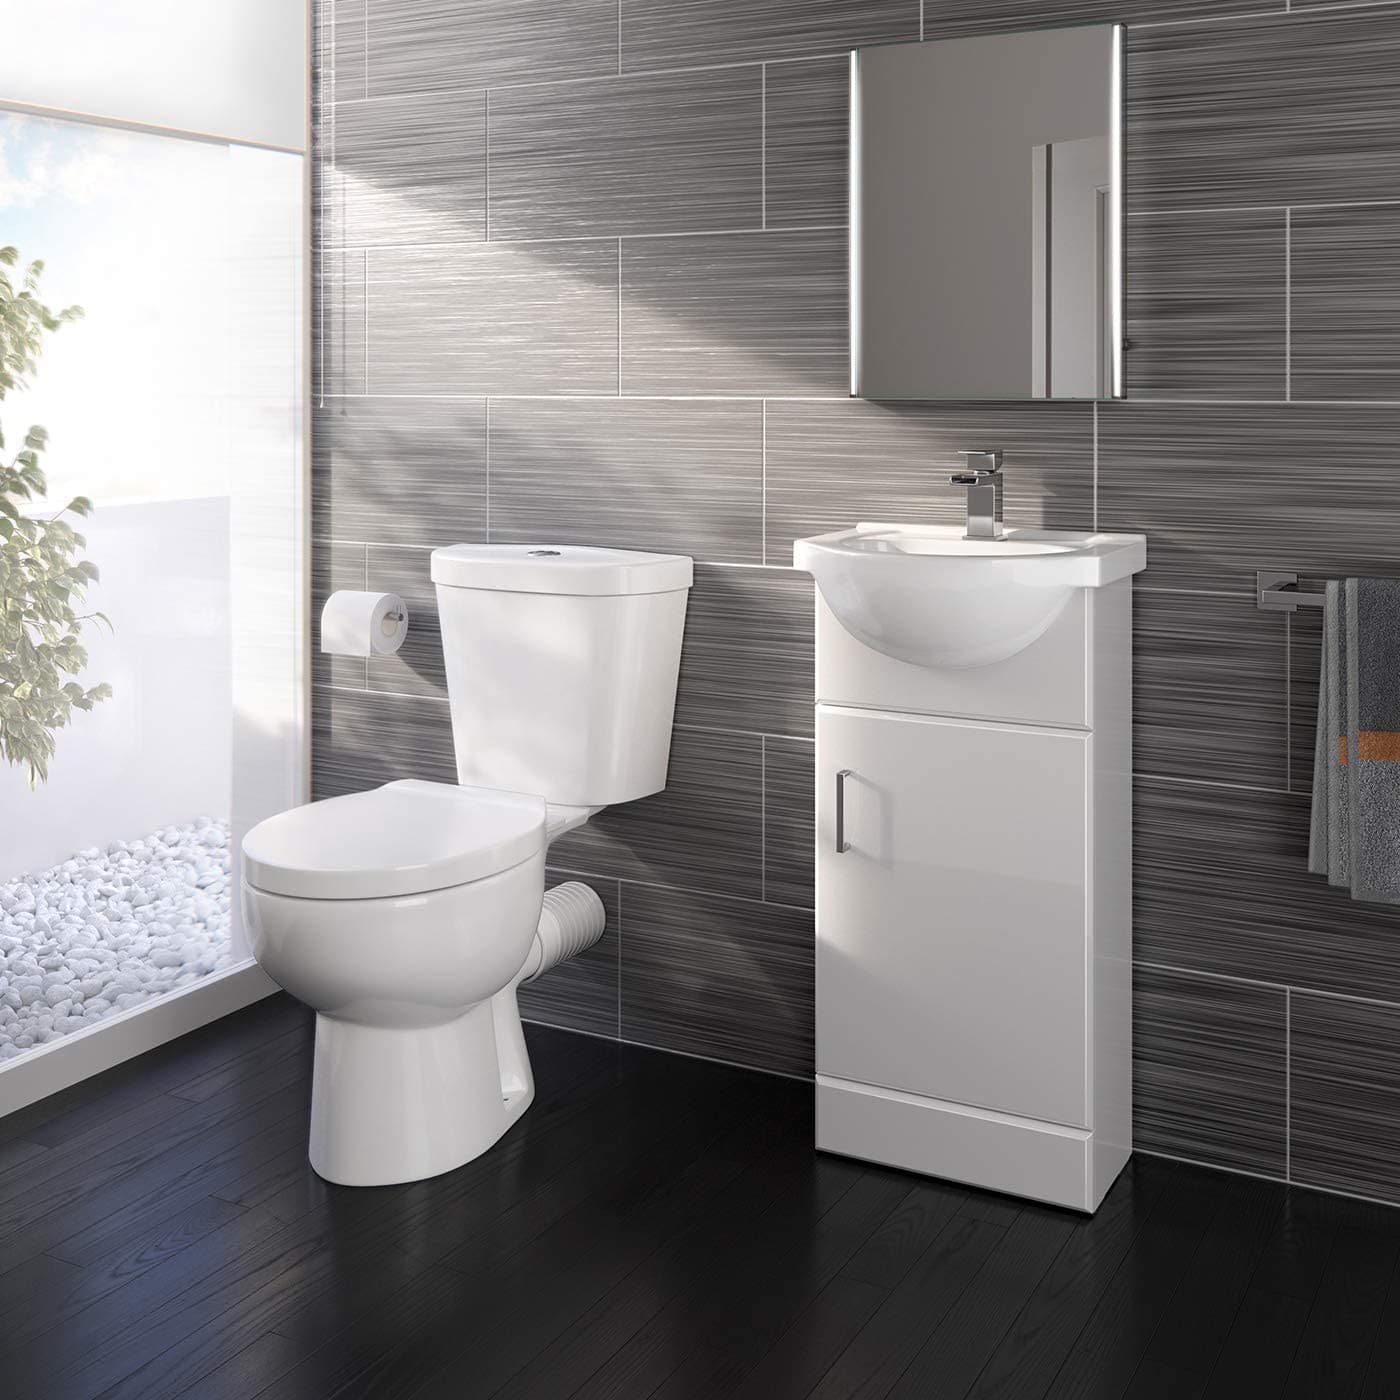 Petite Modern Cloakroom Bathroom Suite - Gloss White